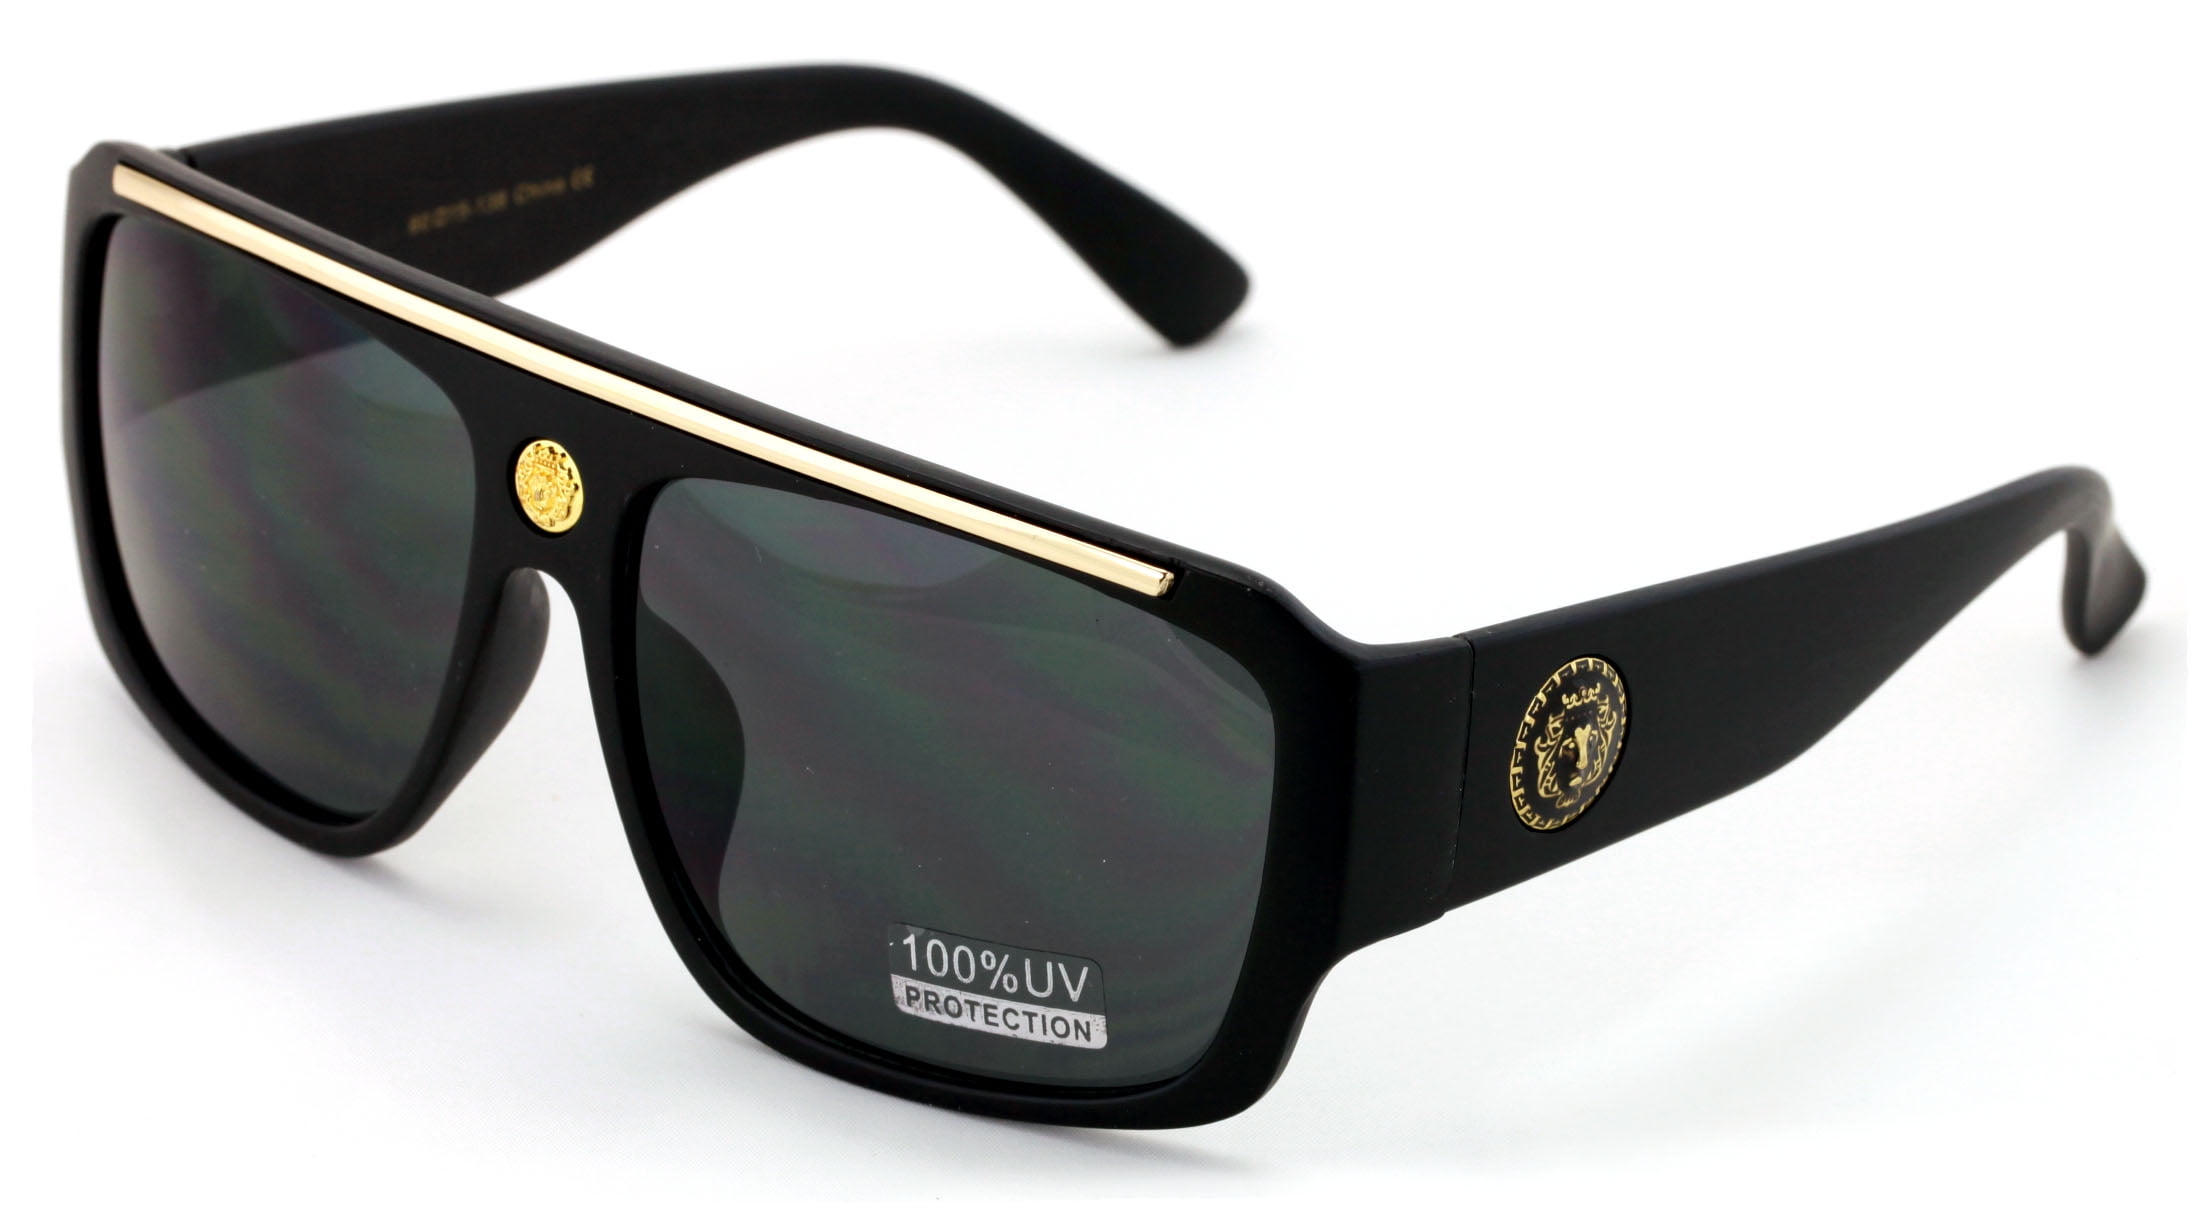 Flat Top Thin Square Frame Sunglasses Unisex Casual Fashion